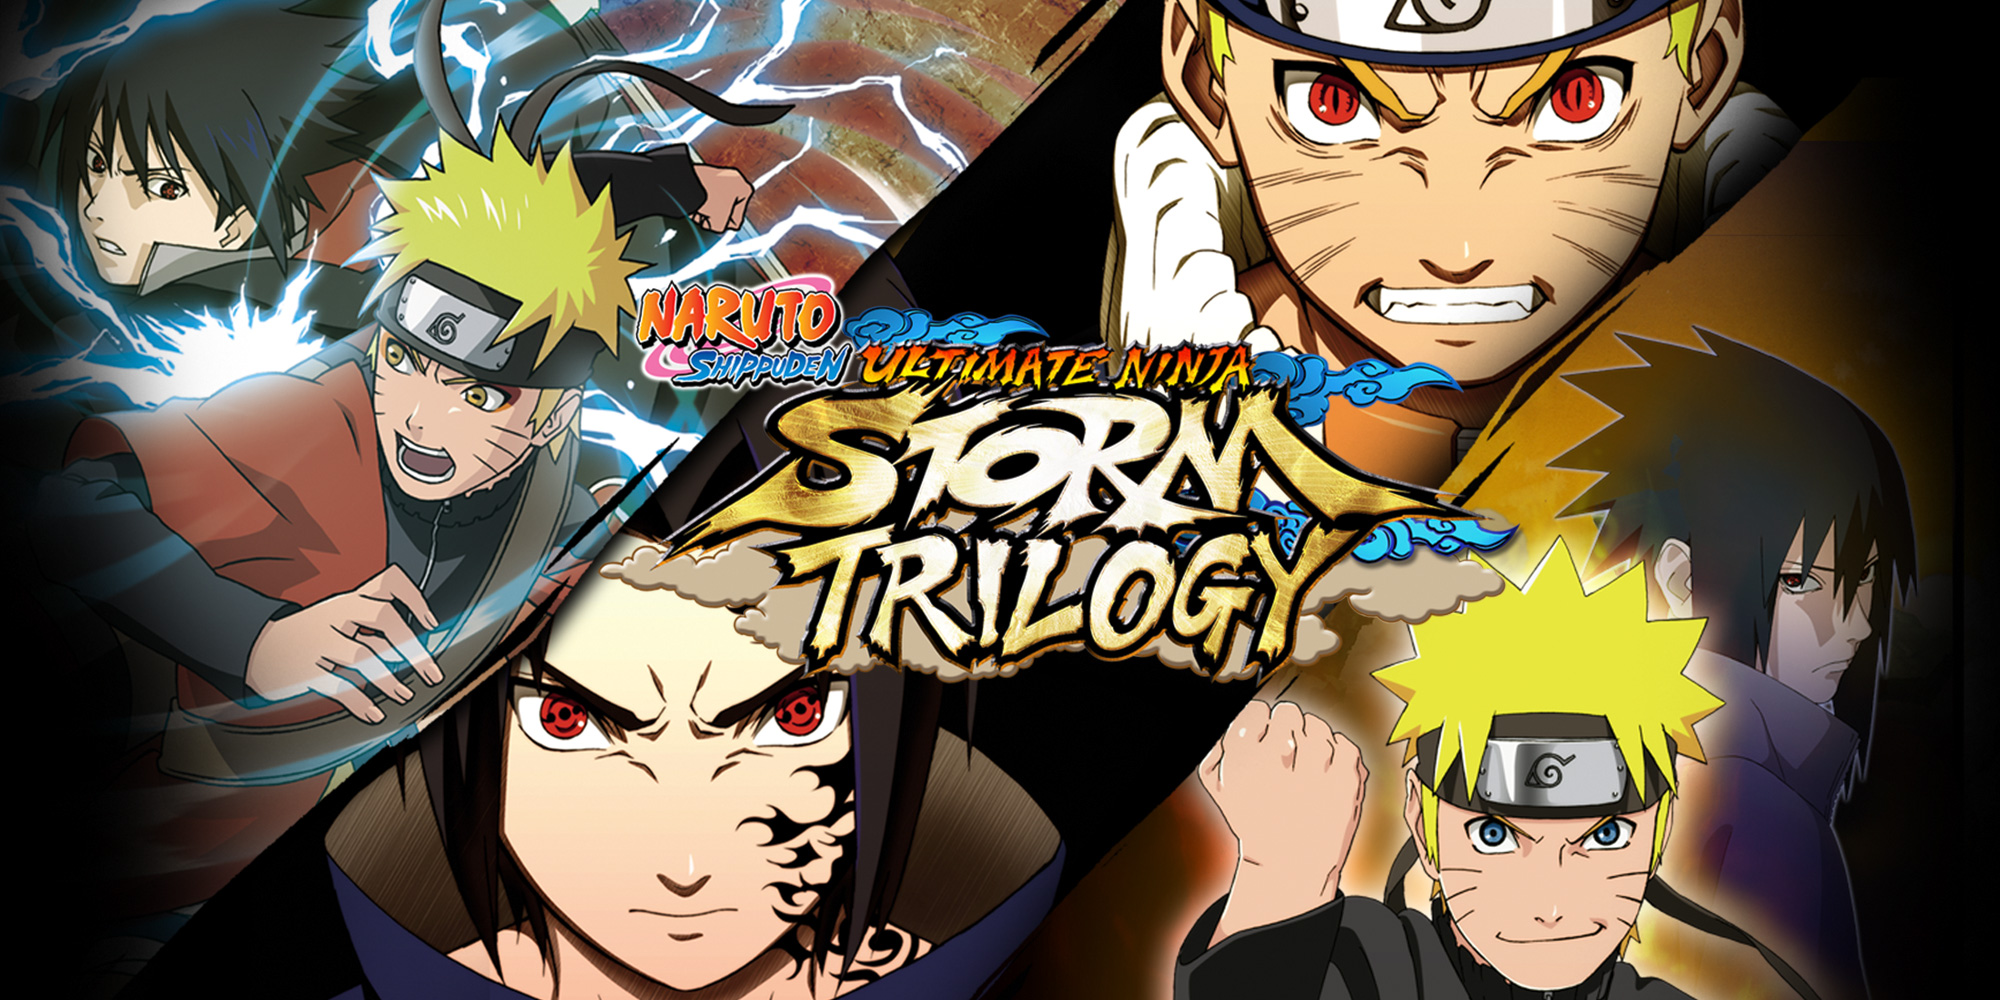 Naruto Storm 4 Ps3 Midia digital - DS GAMES PRO